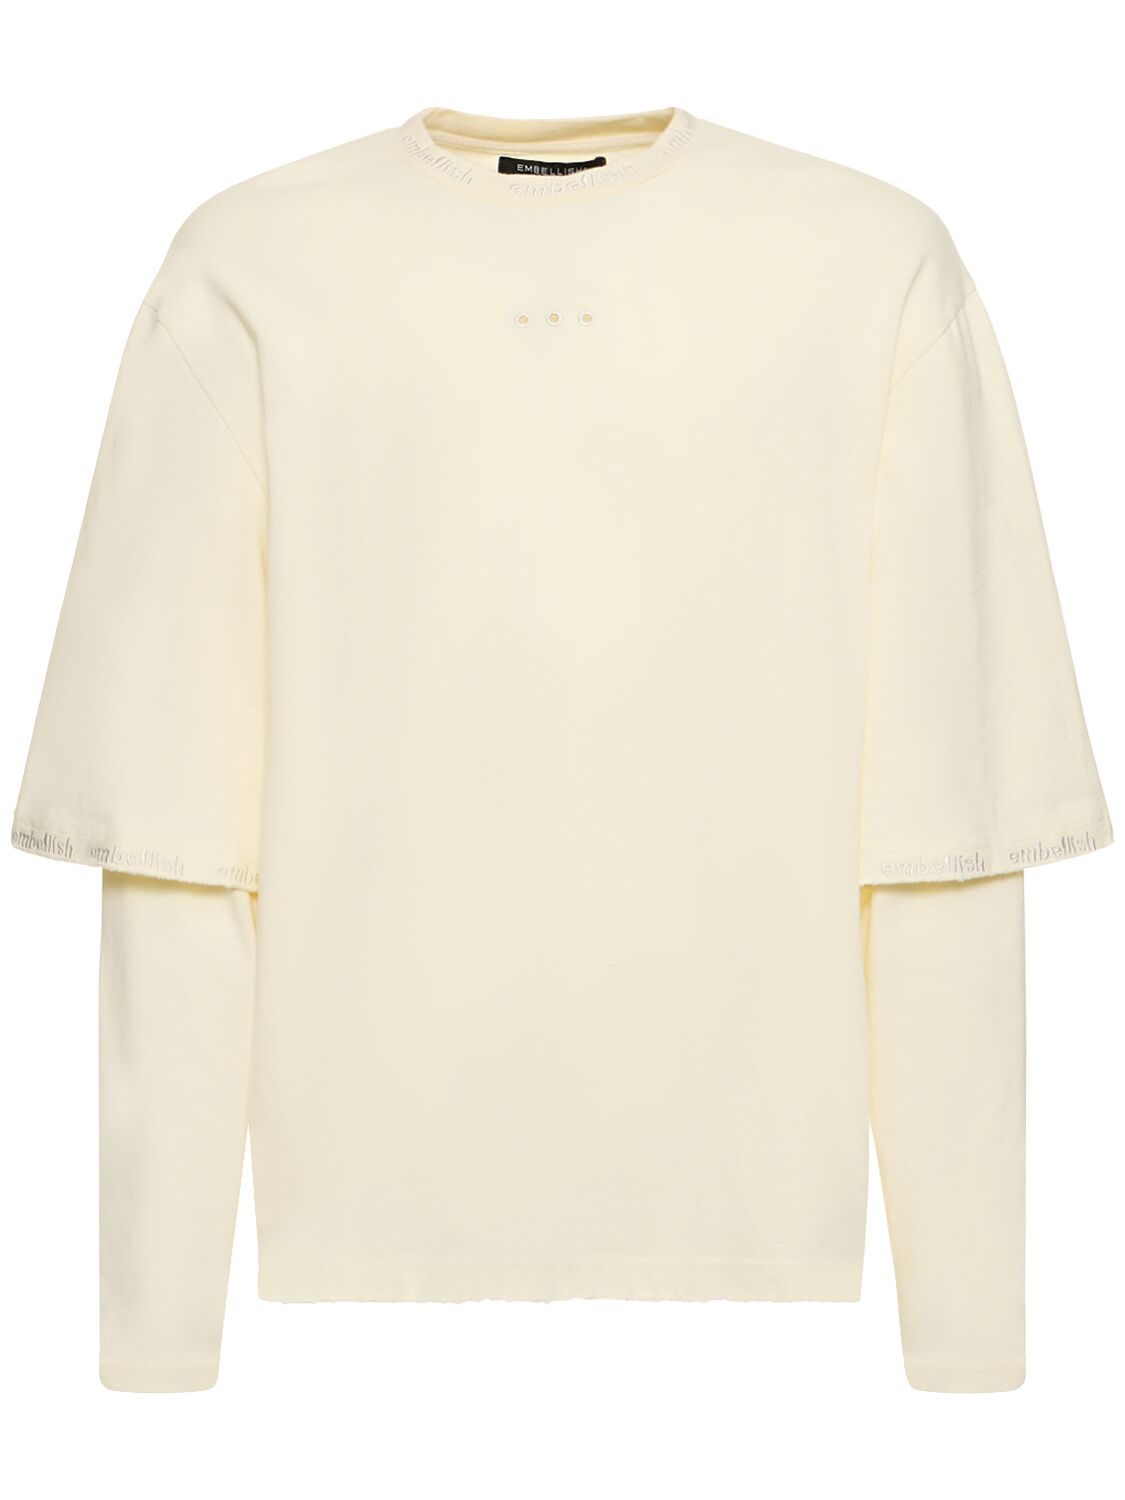 EMBELLISH Mirage Cotton Long Sleeve T-shirt